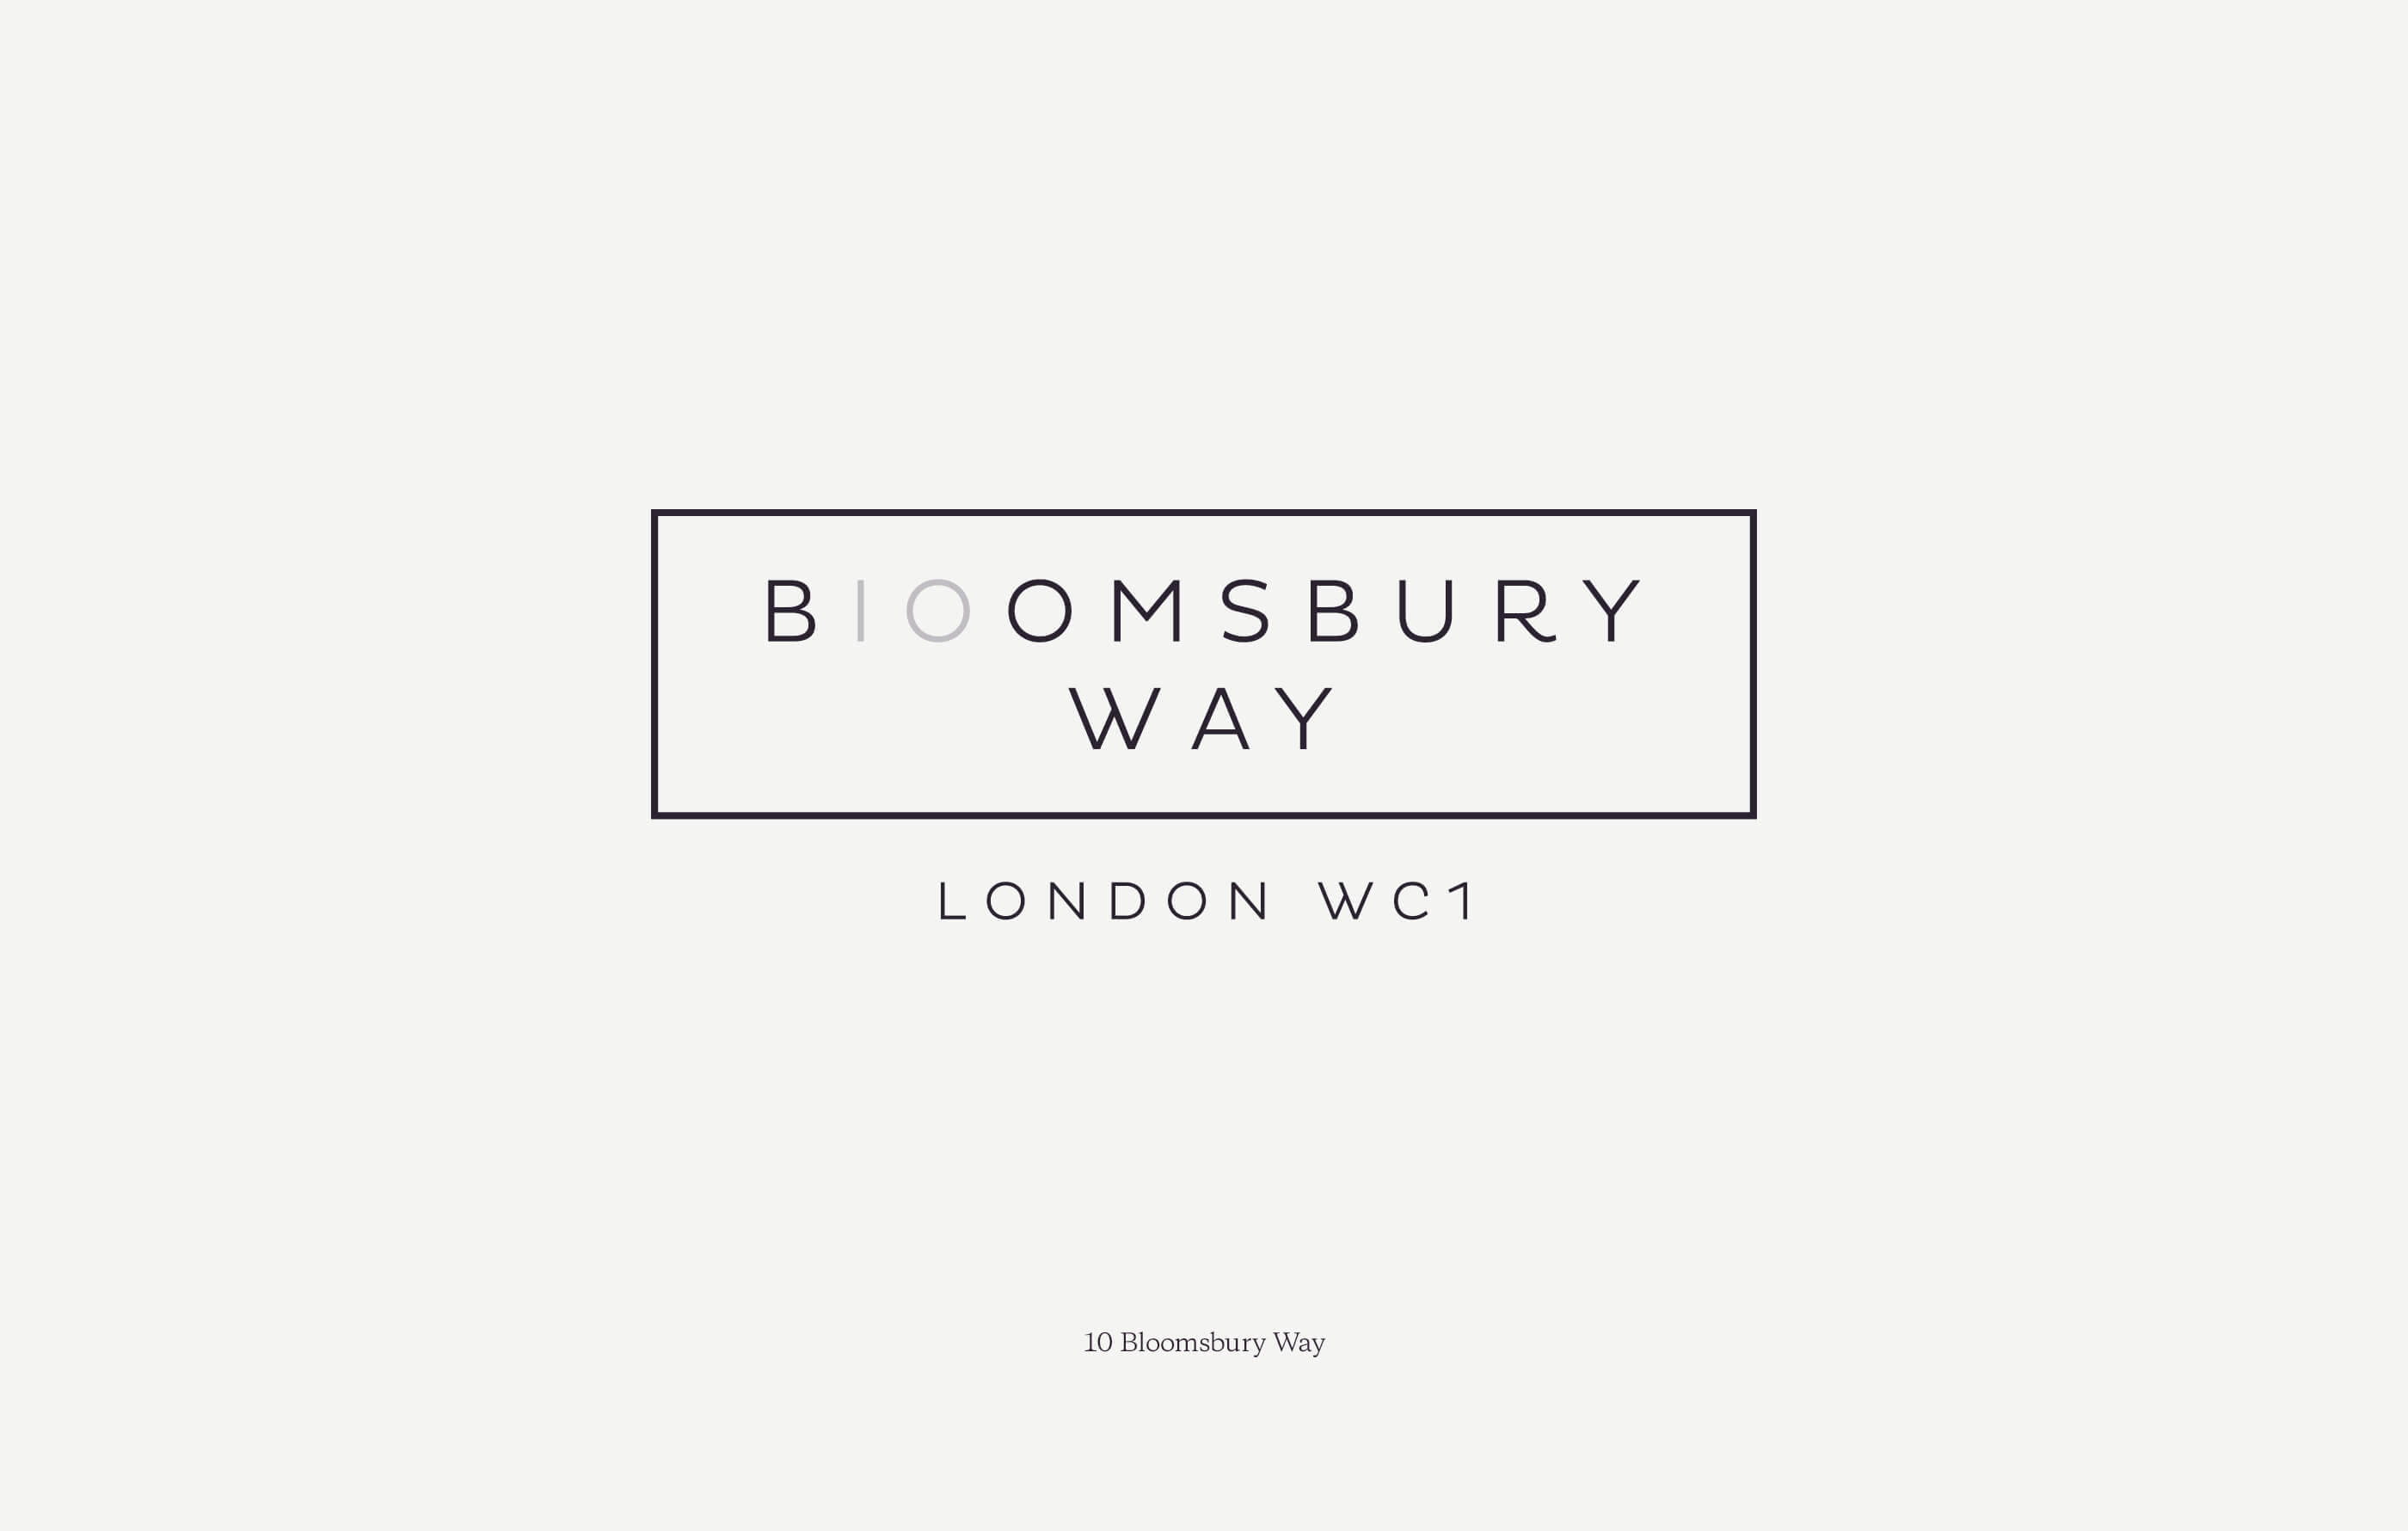 Black 10 Bloomsbury Way branding on a grey background